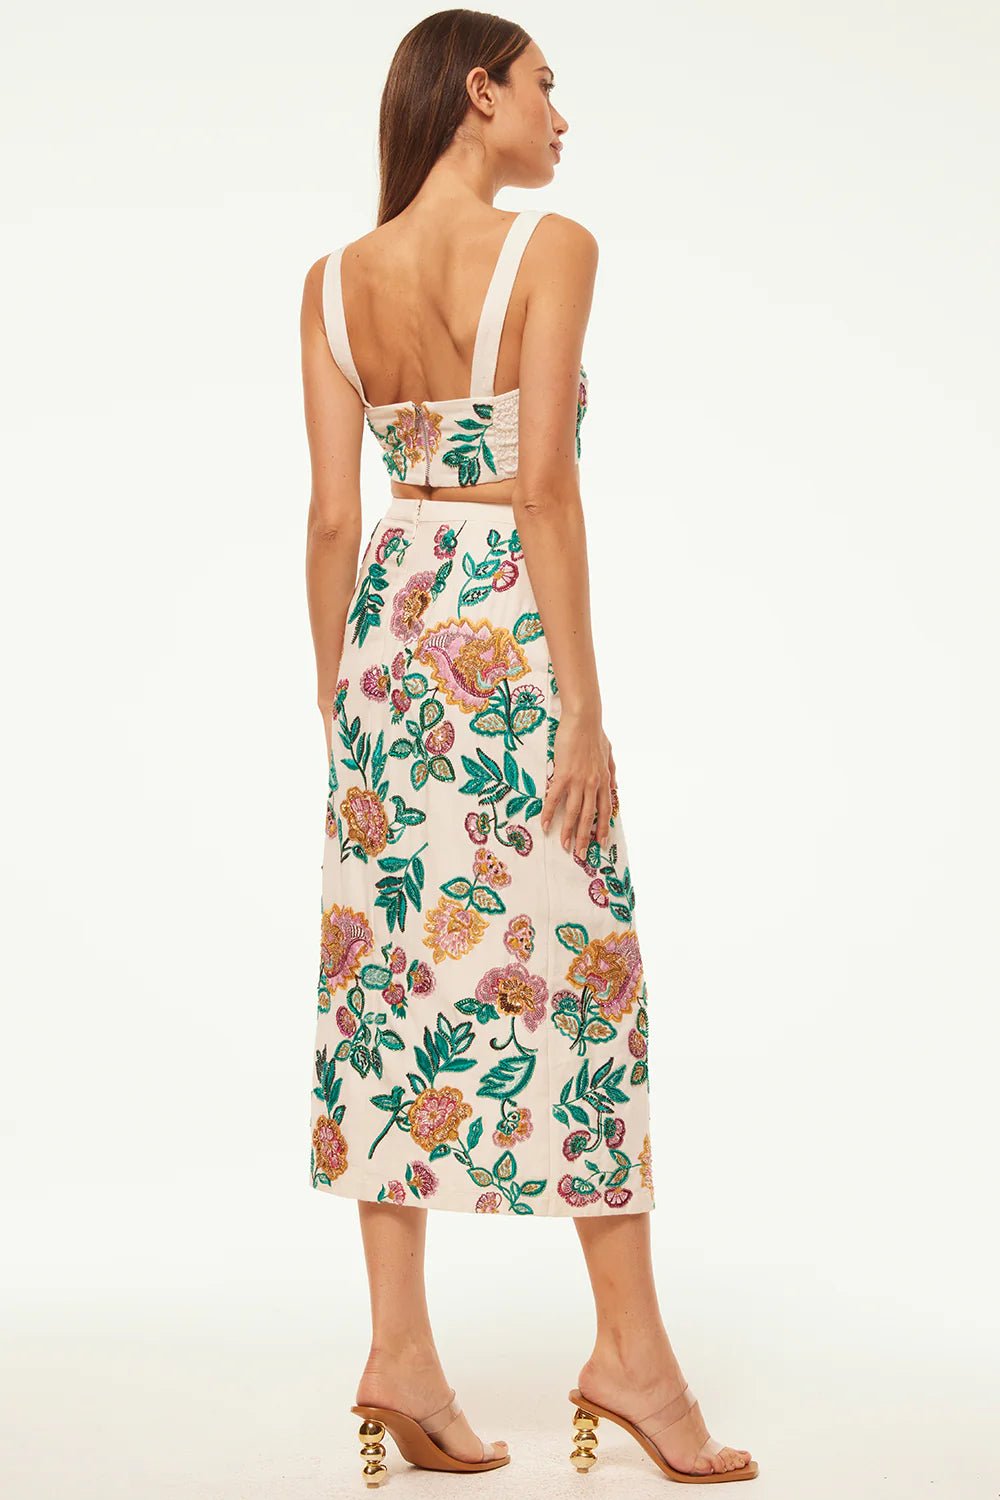 Misa Thema Skirt in Paisley Floral - Estilo Boutique